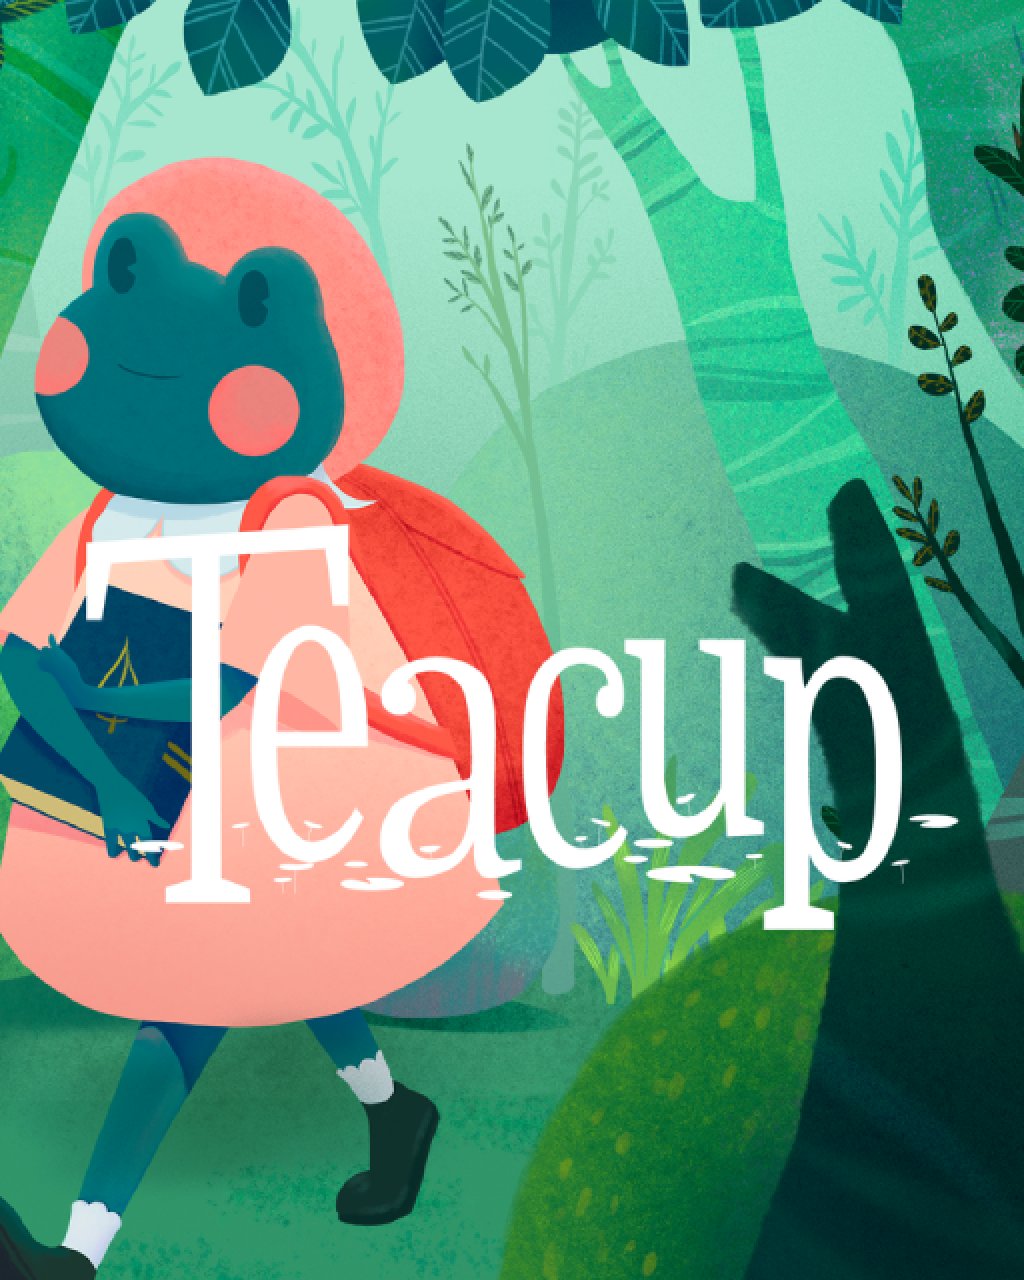 Teacup